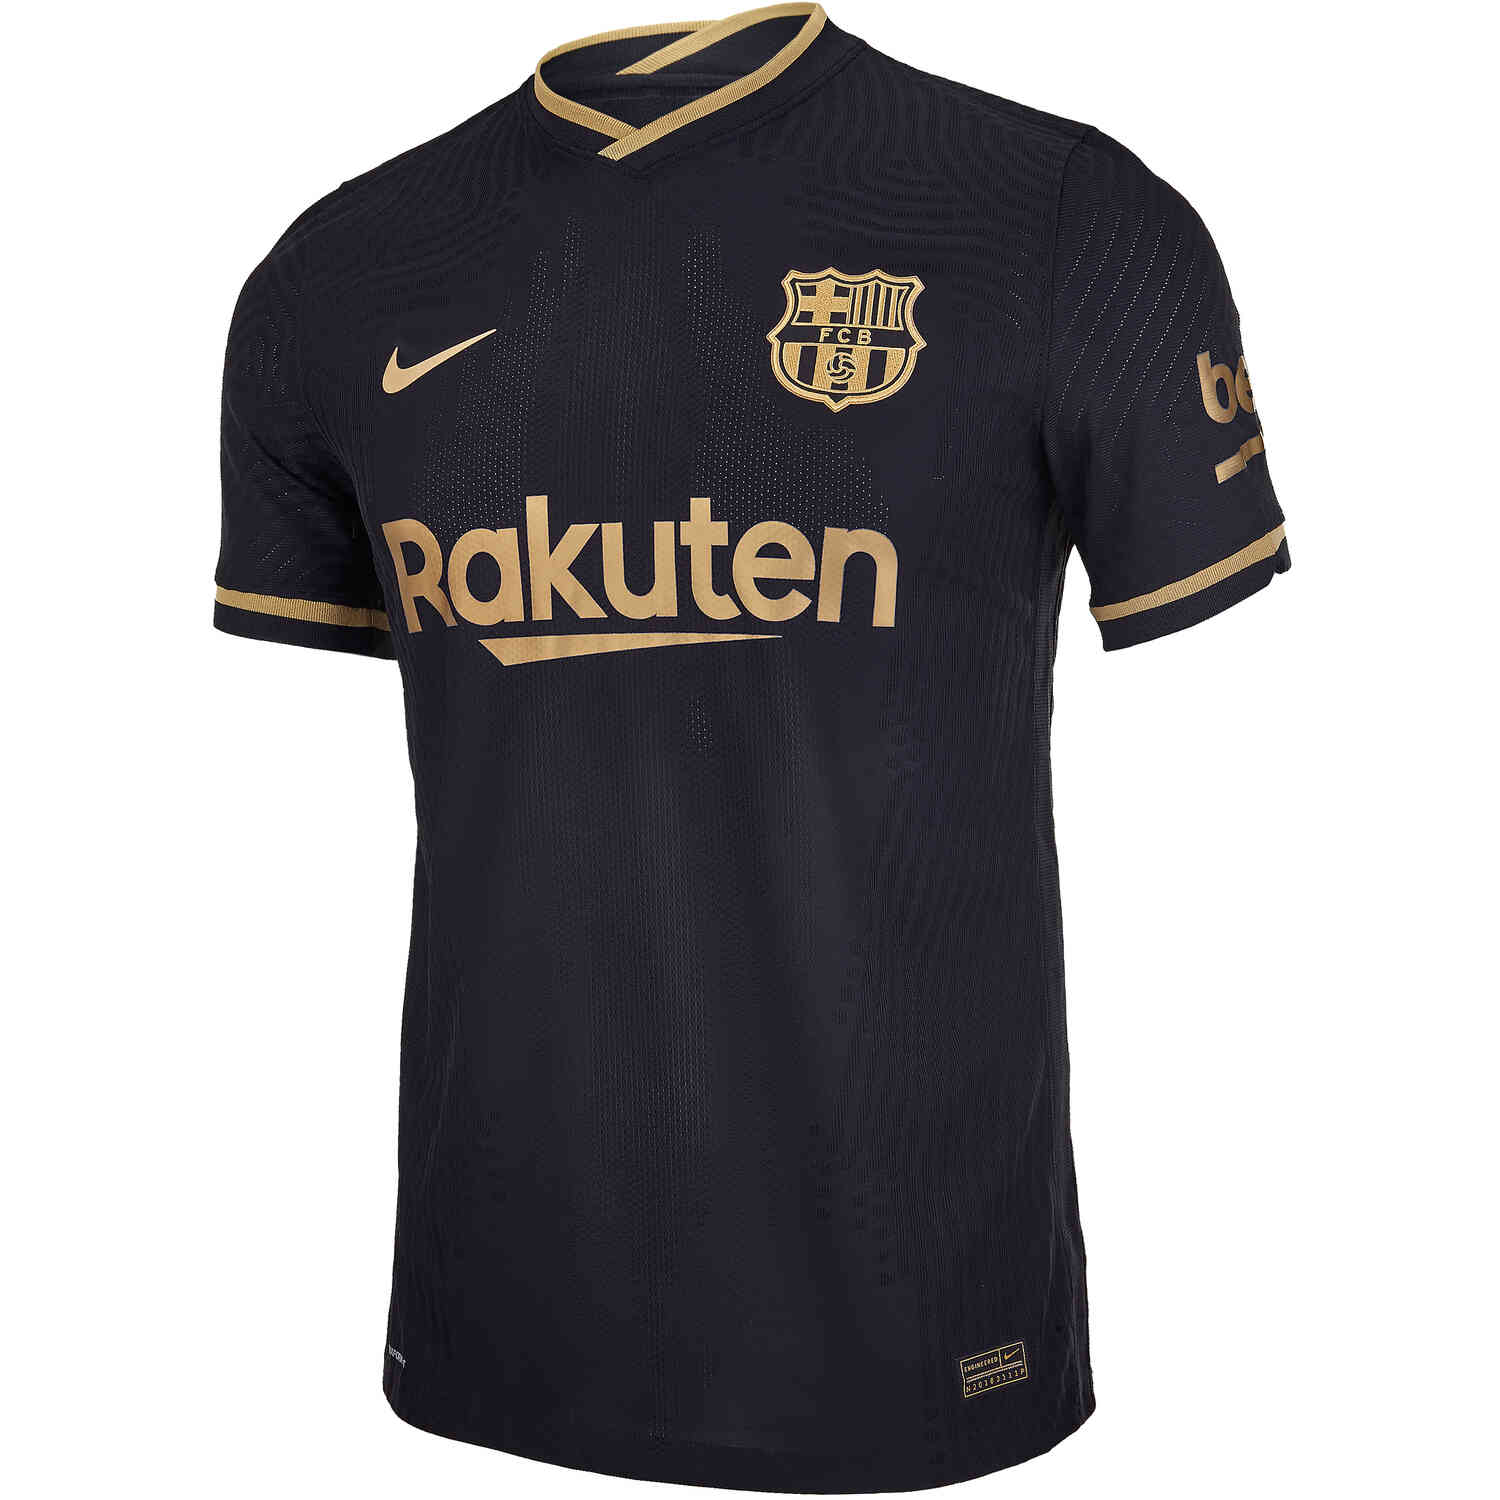 Barca Jersey / Fc Barcelona Jersey Barcelona Shirt Soccerpro Com